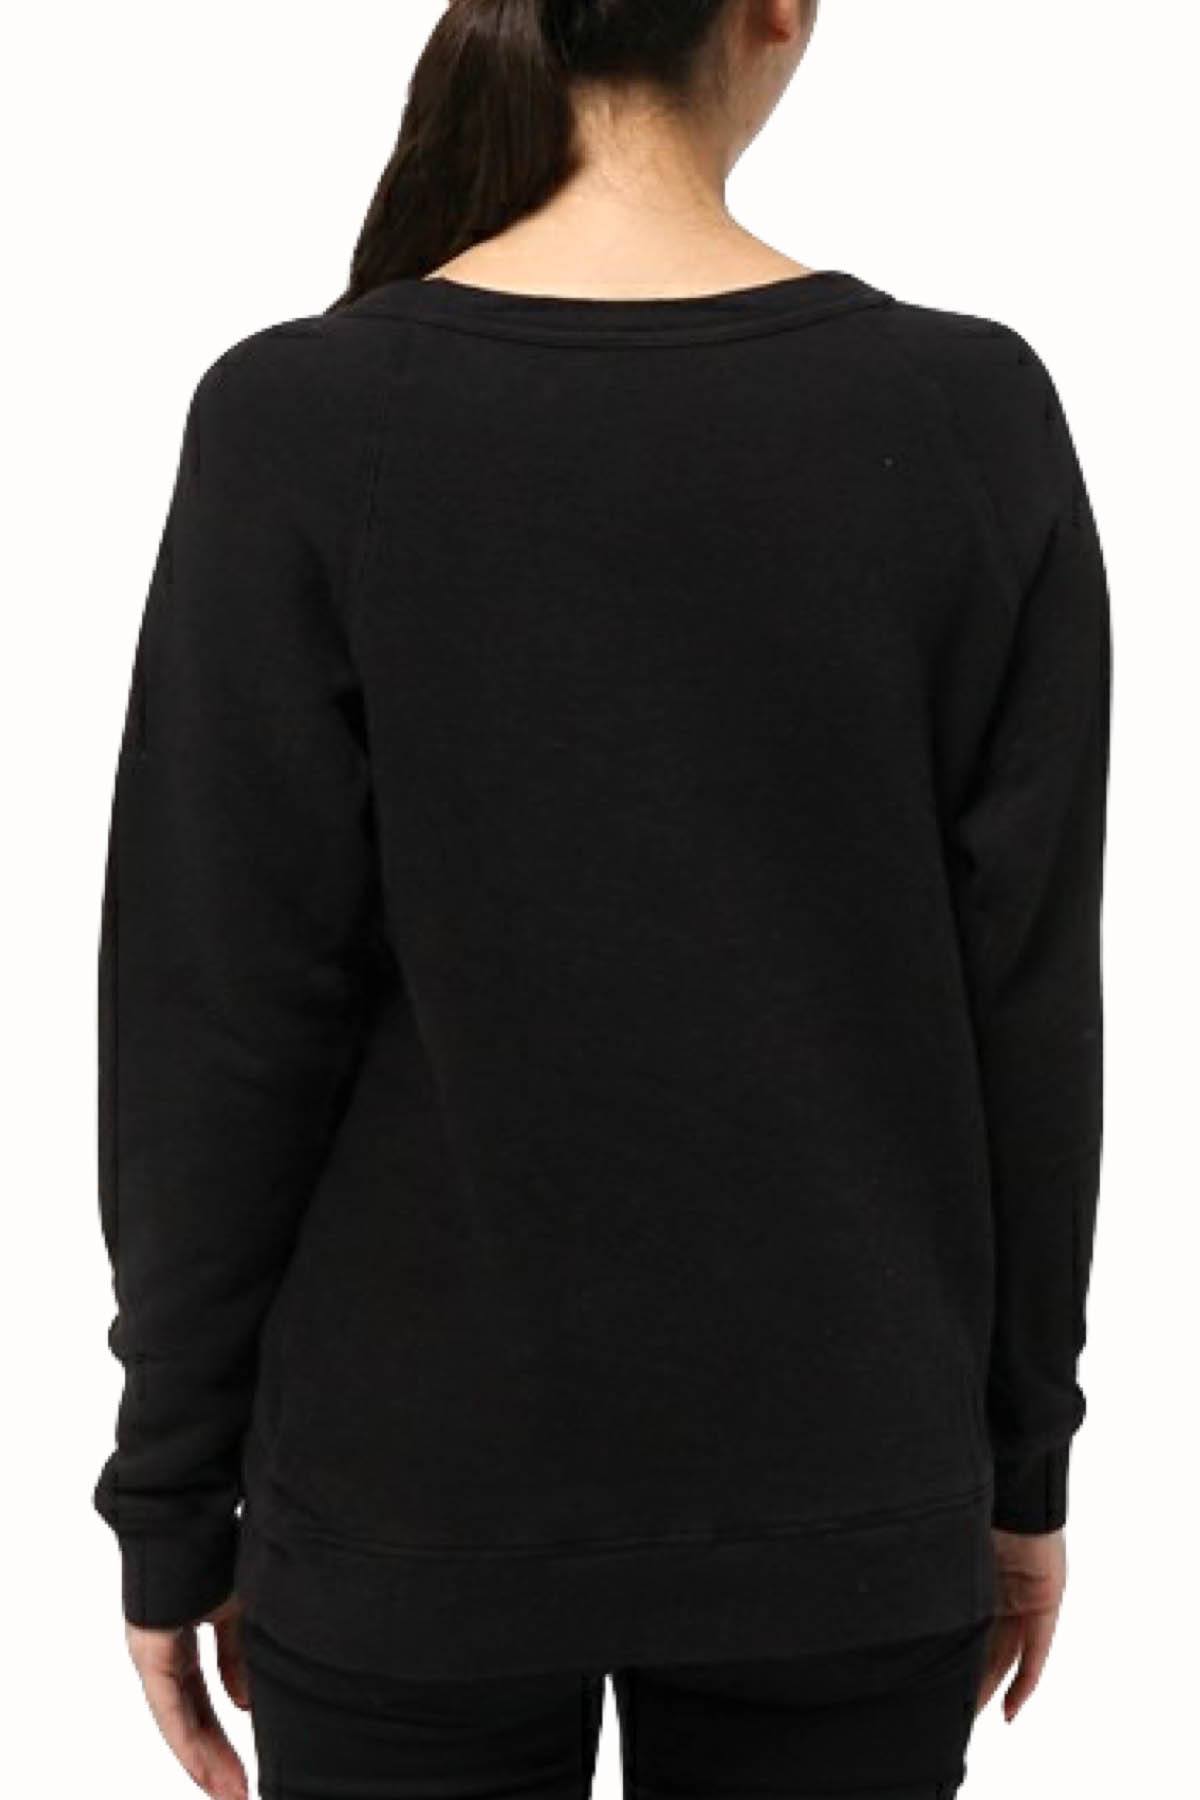 Rxmance Unisex Black 'Ski Bum' Sweatshirt